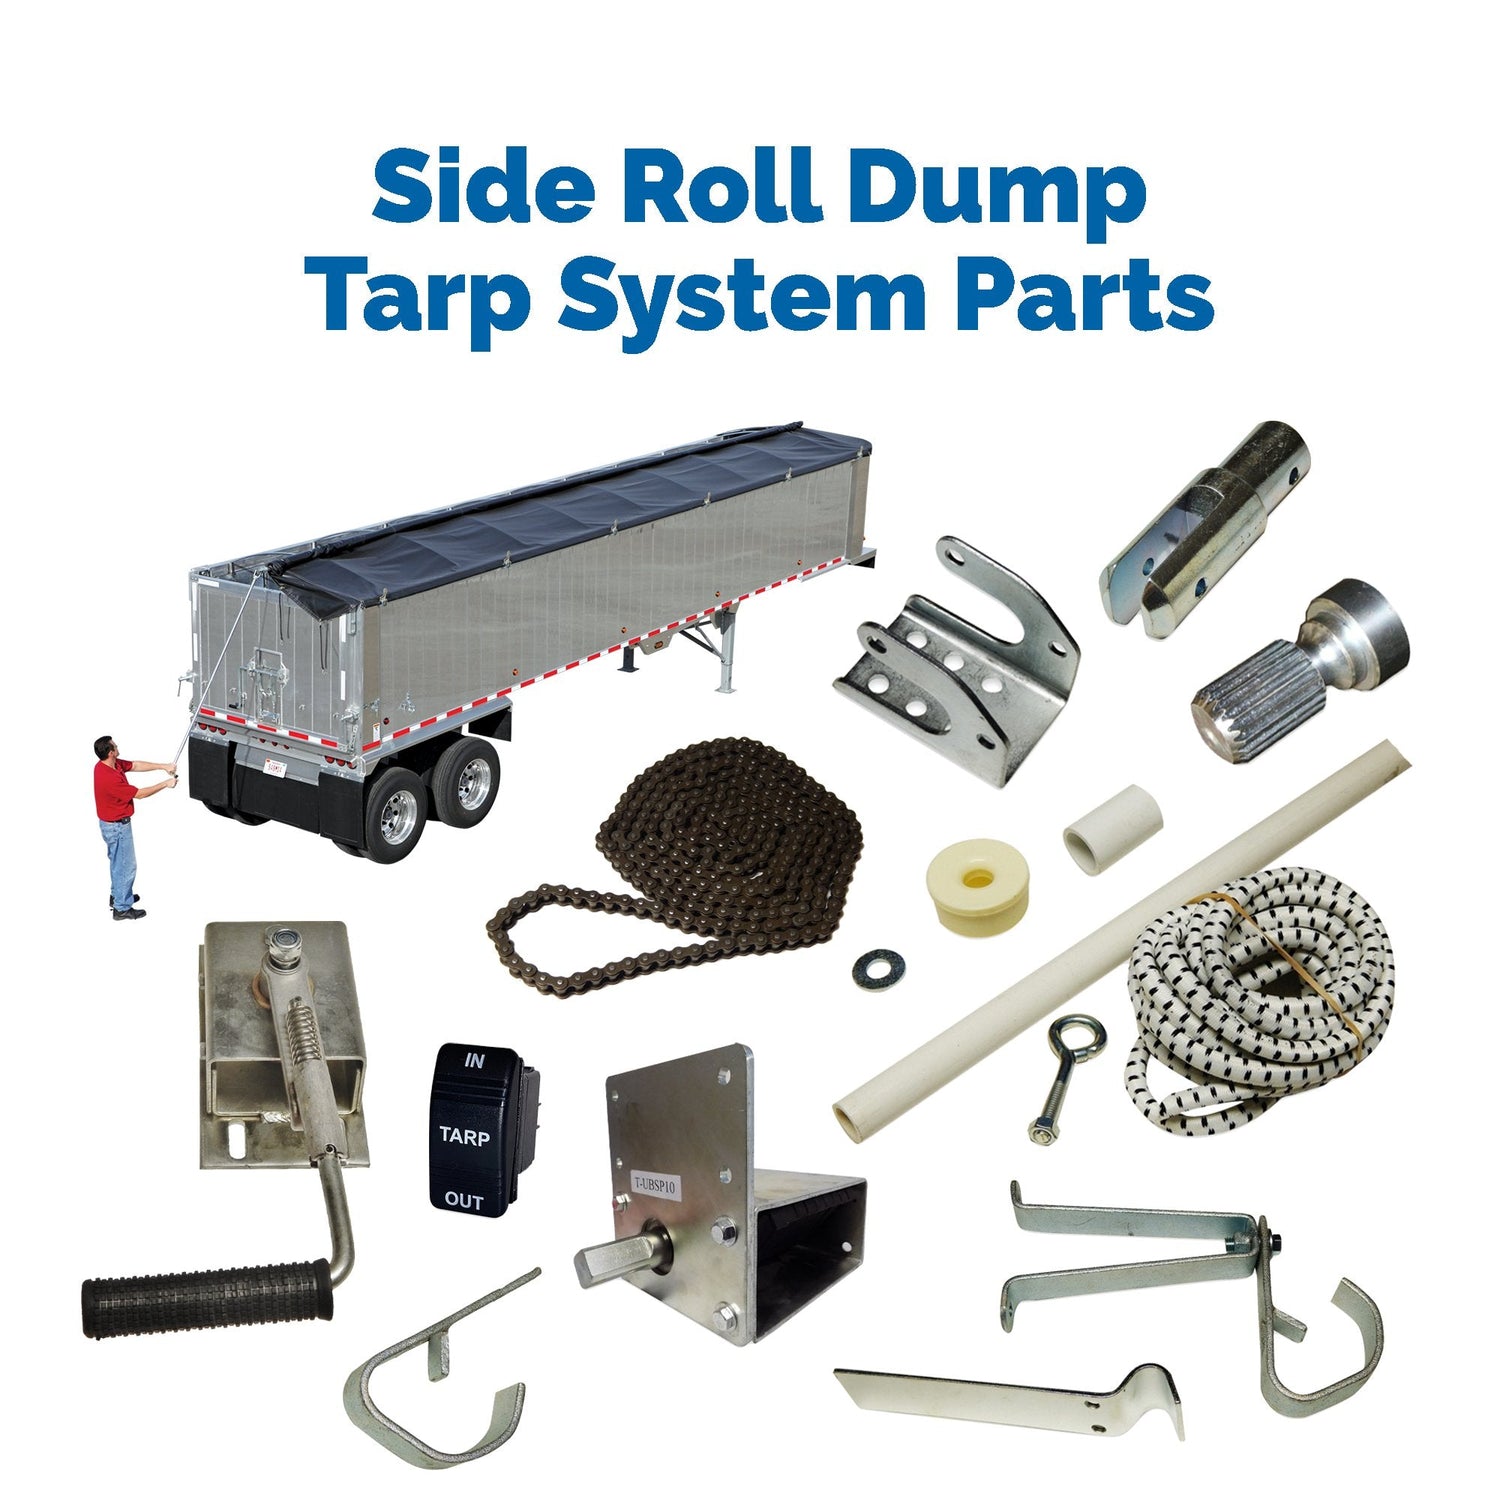 Side Roll Dump Tarp System Parts